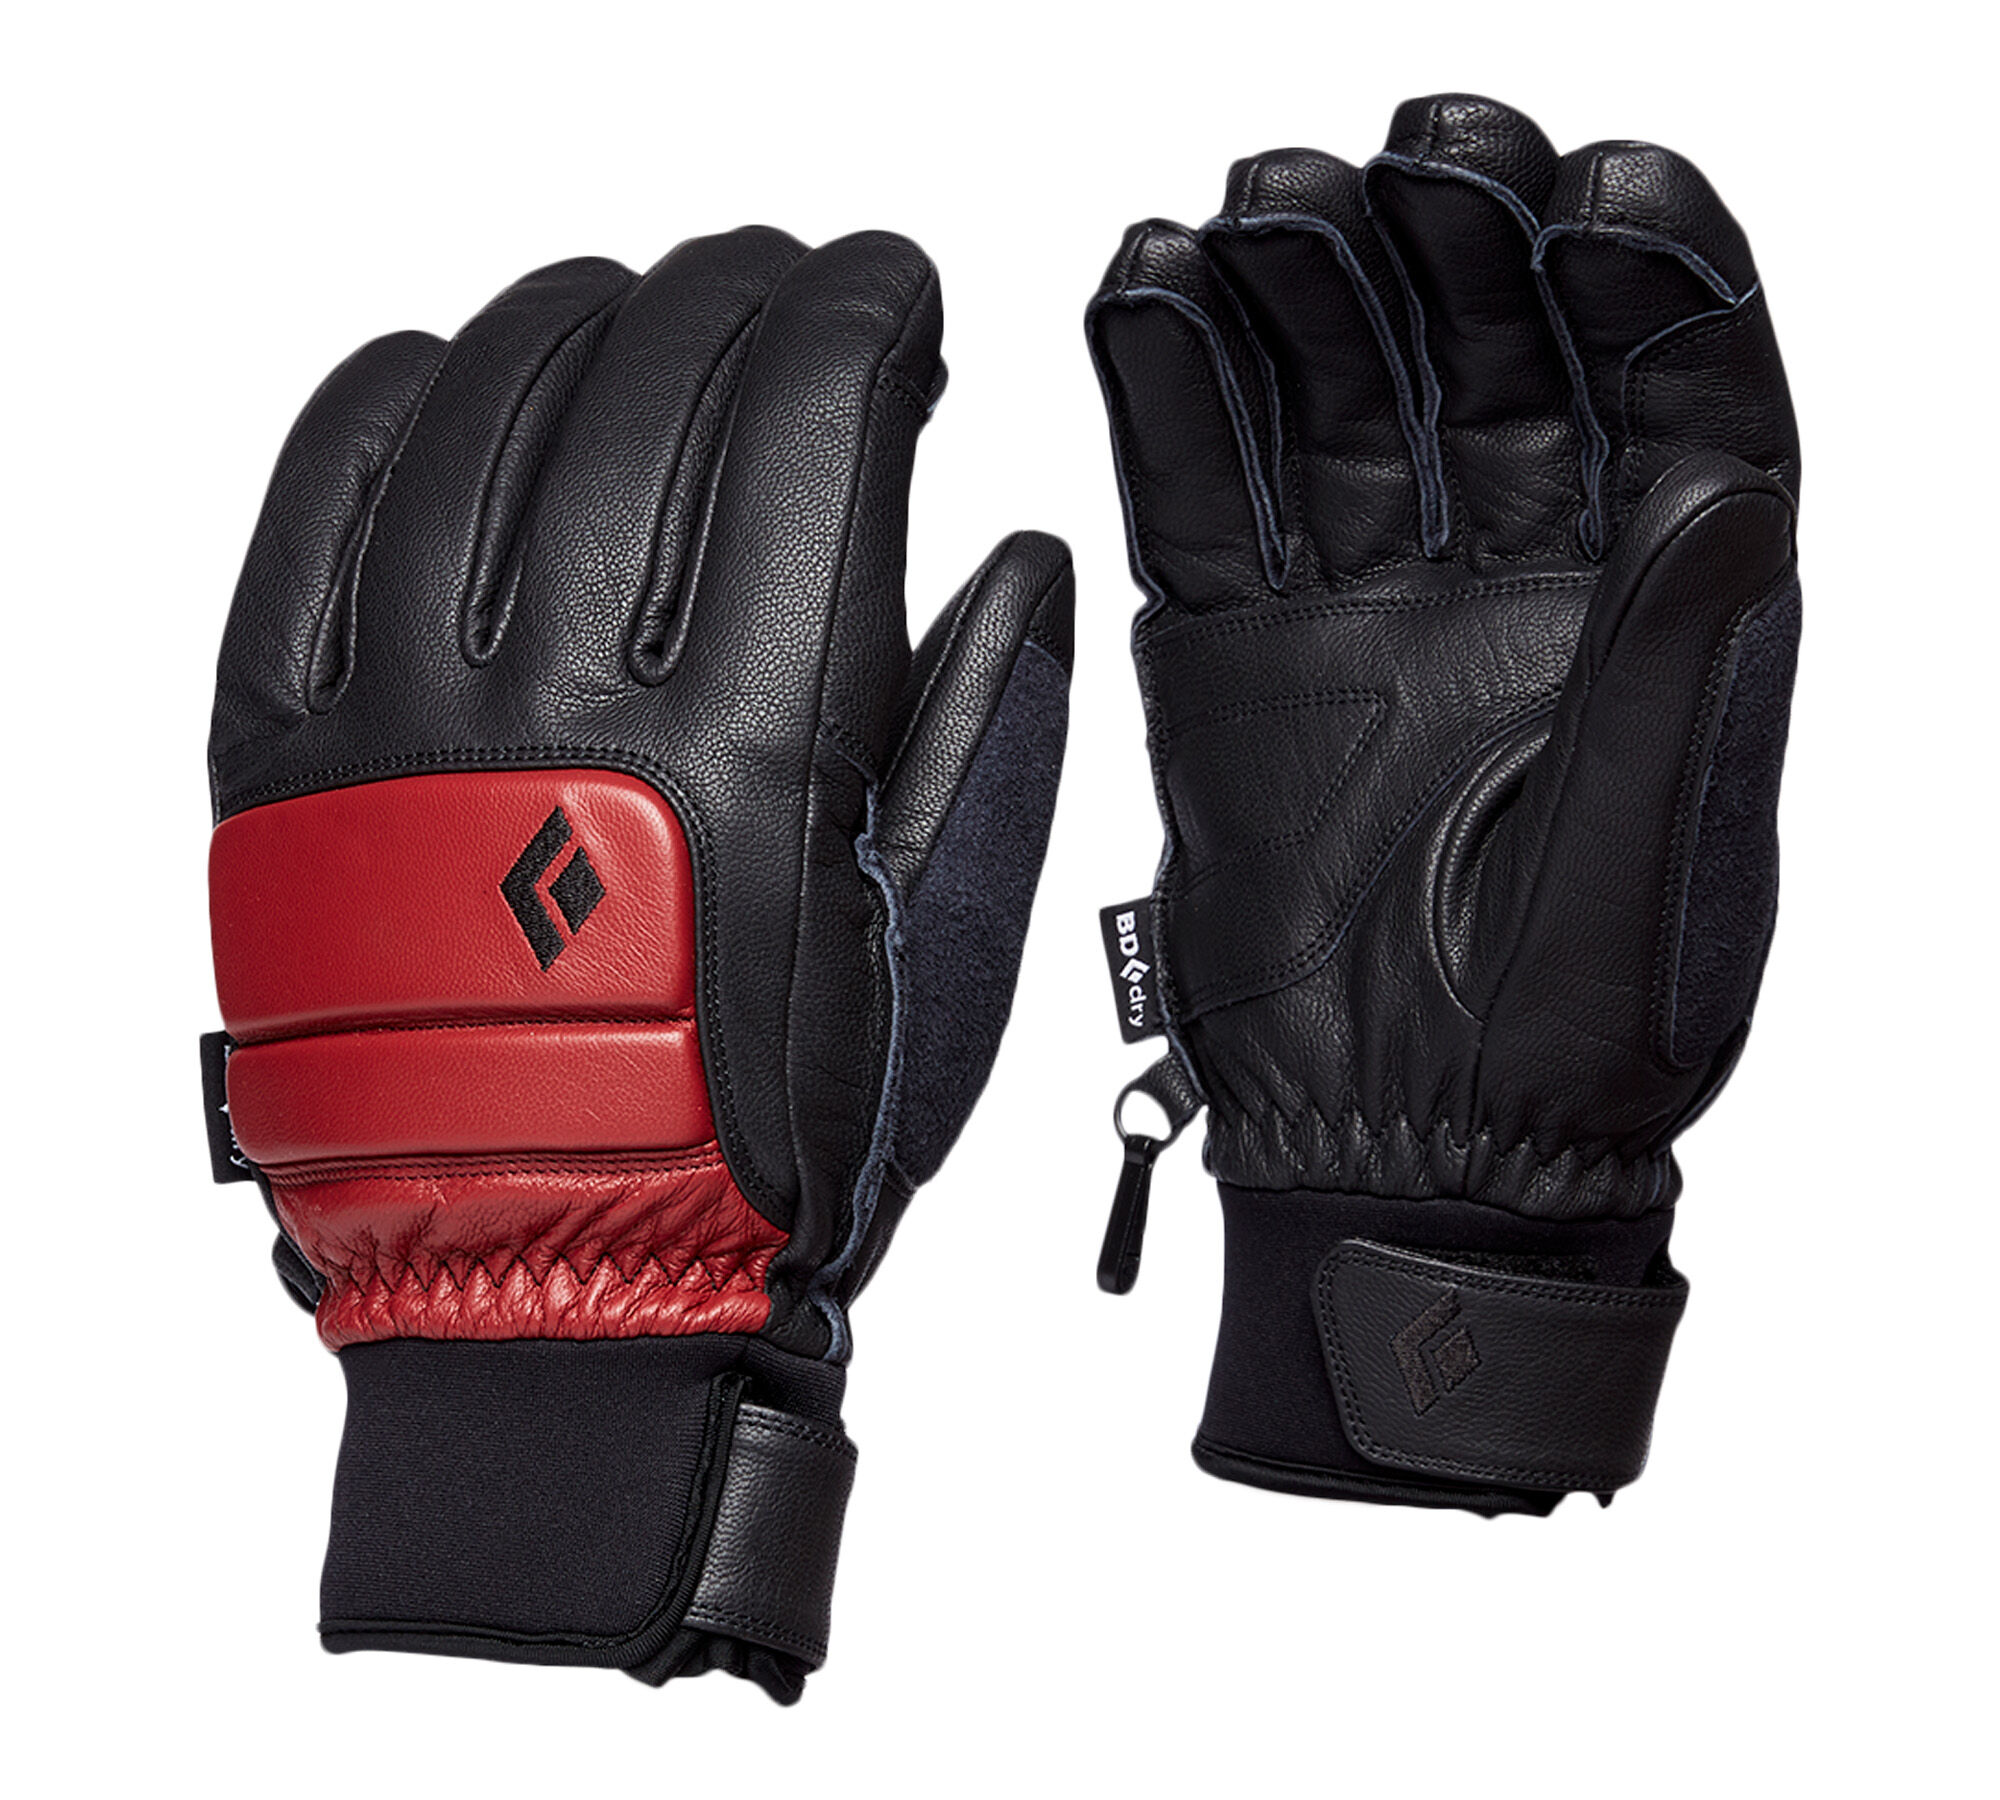 Black Diamond - Spark - Gloves